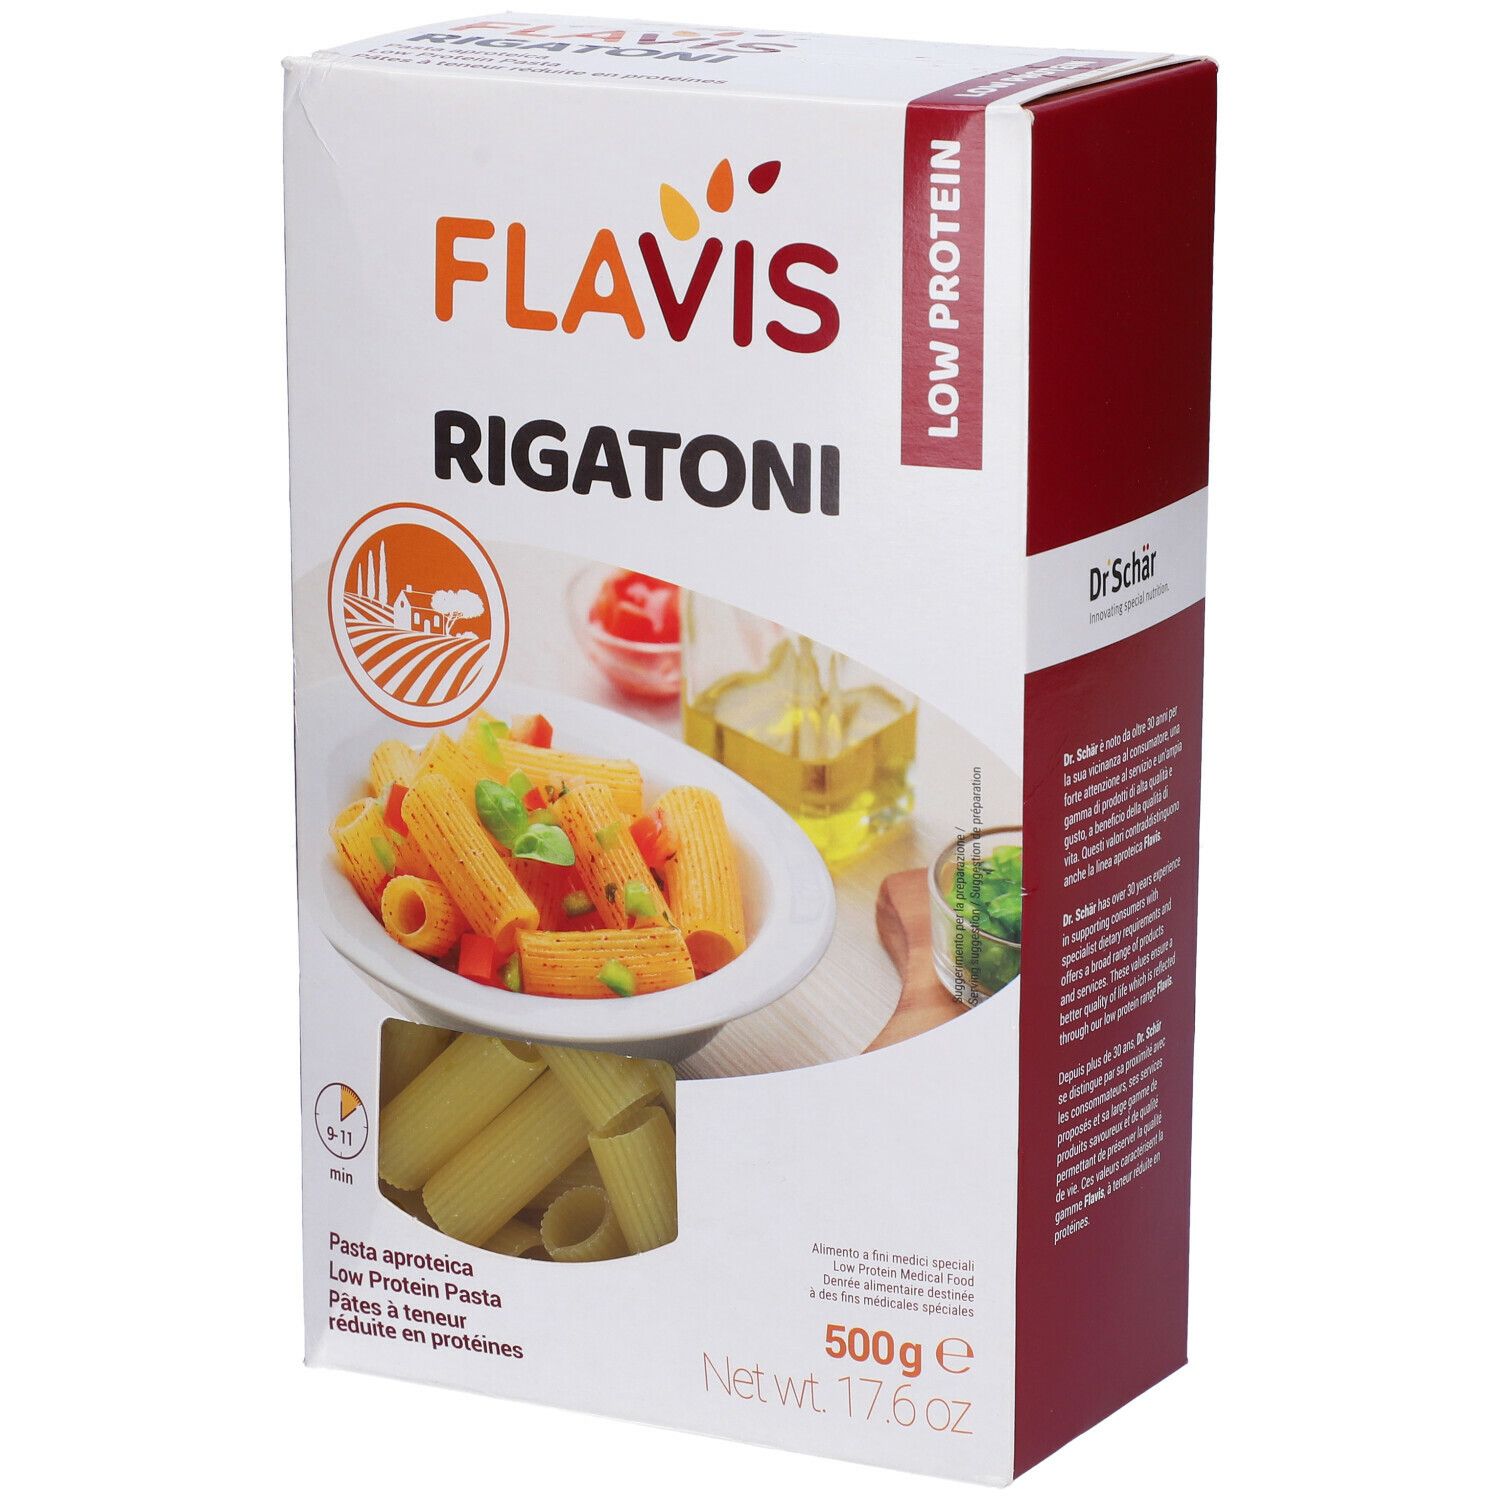 FLAVIS Rigatoni